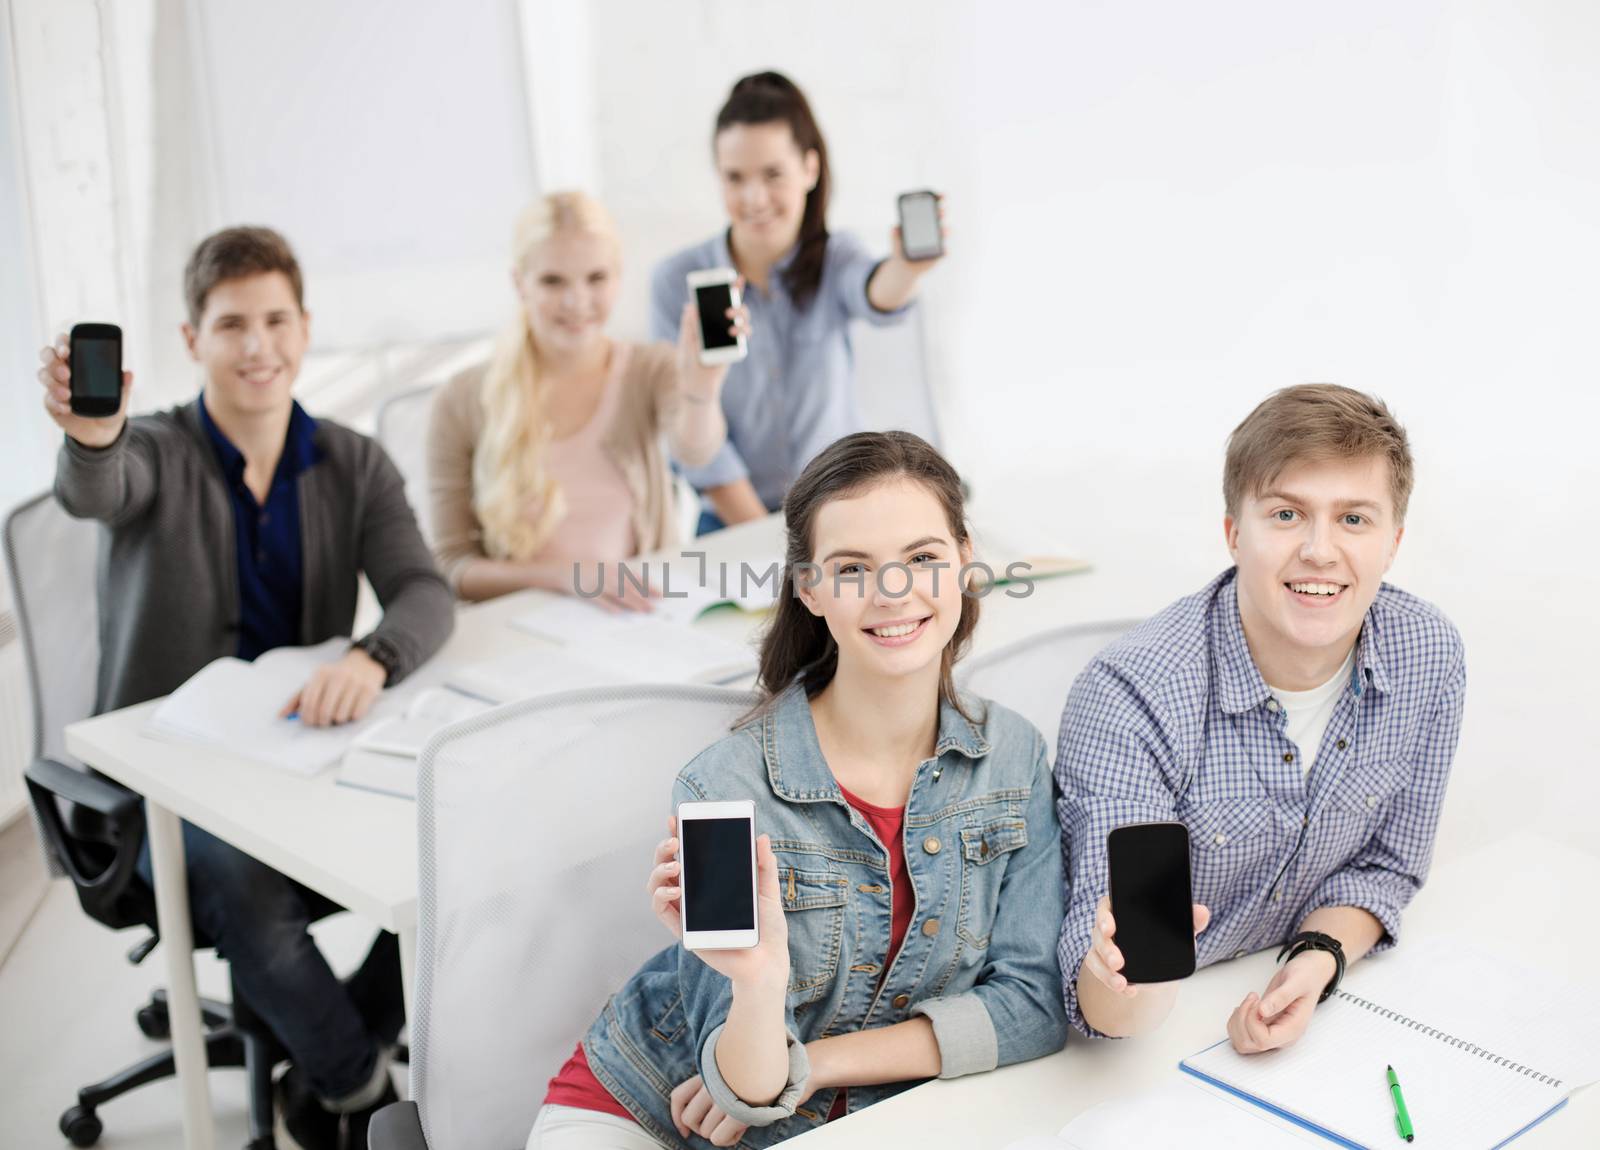 students showing black blank smartphone screens by dolgachov